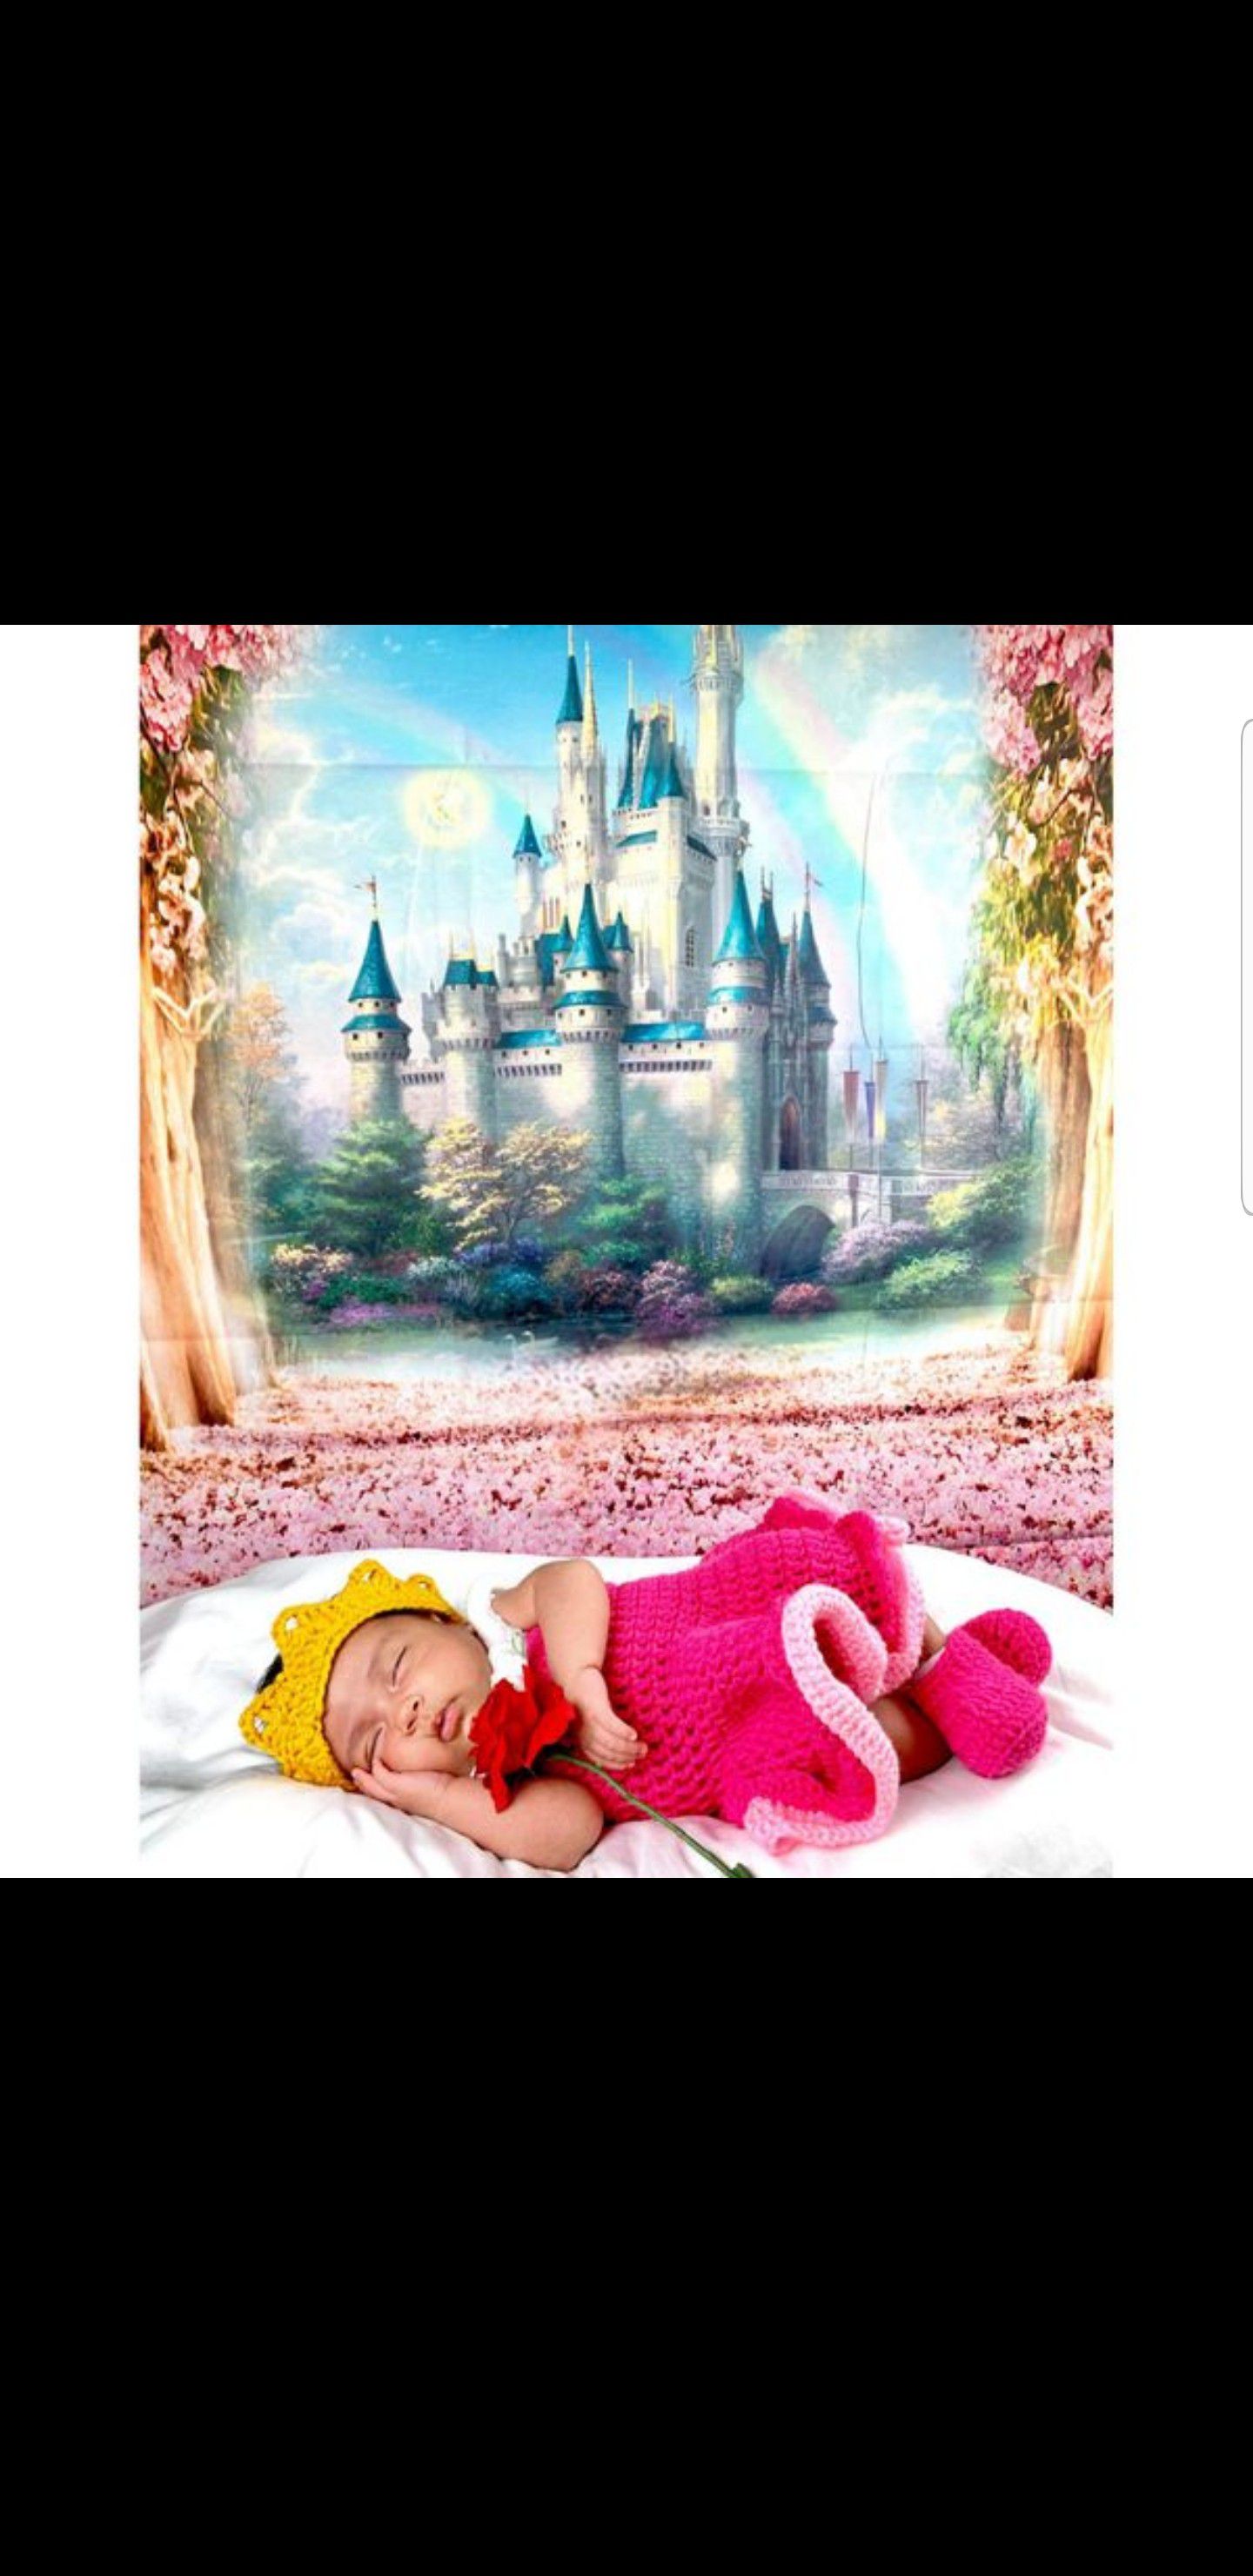 Princess Aurora _ sleeping beauty Halloween costume